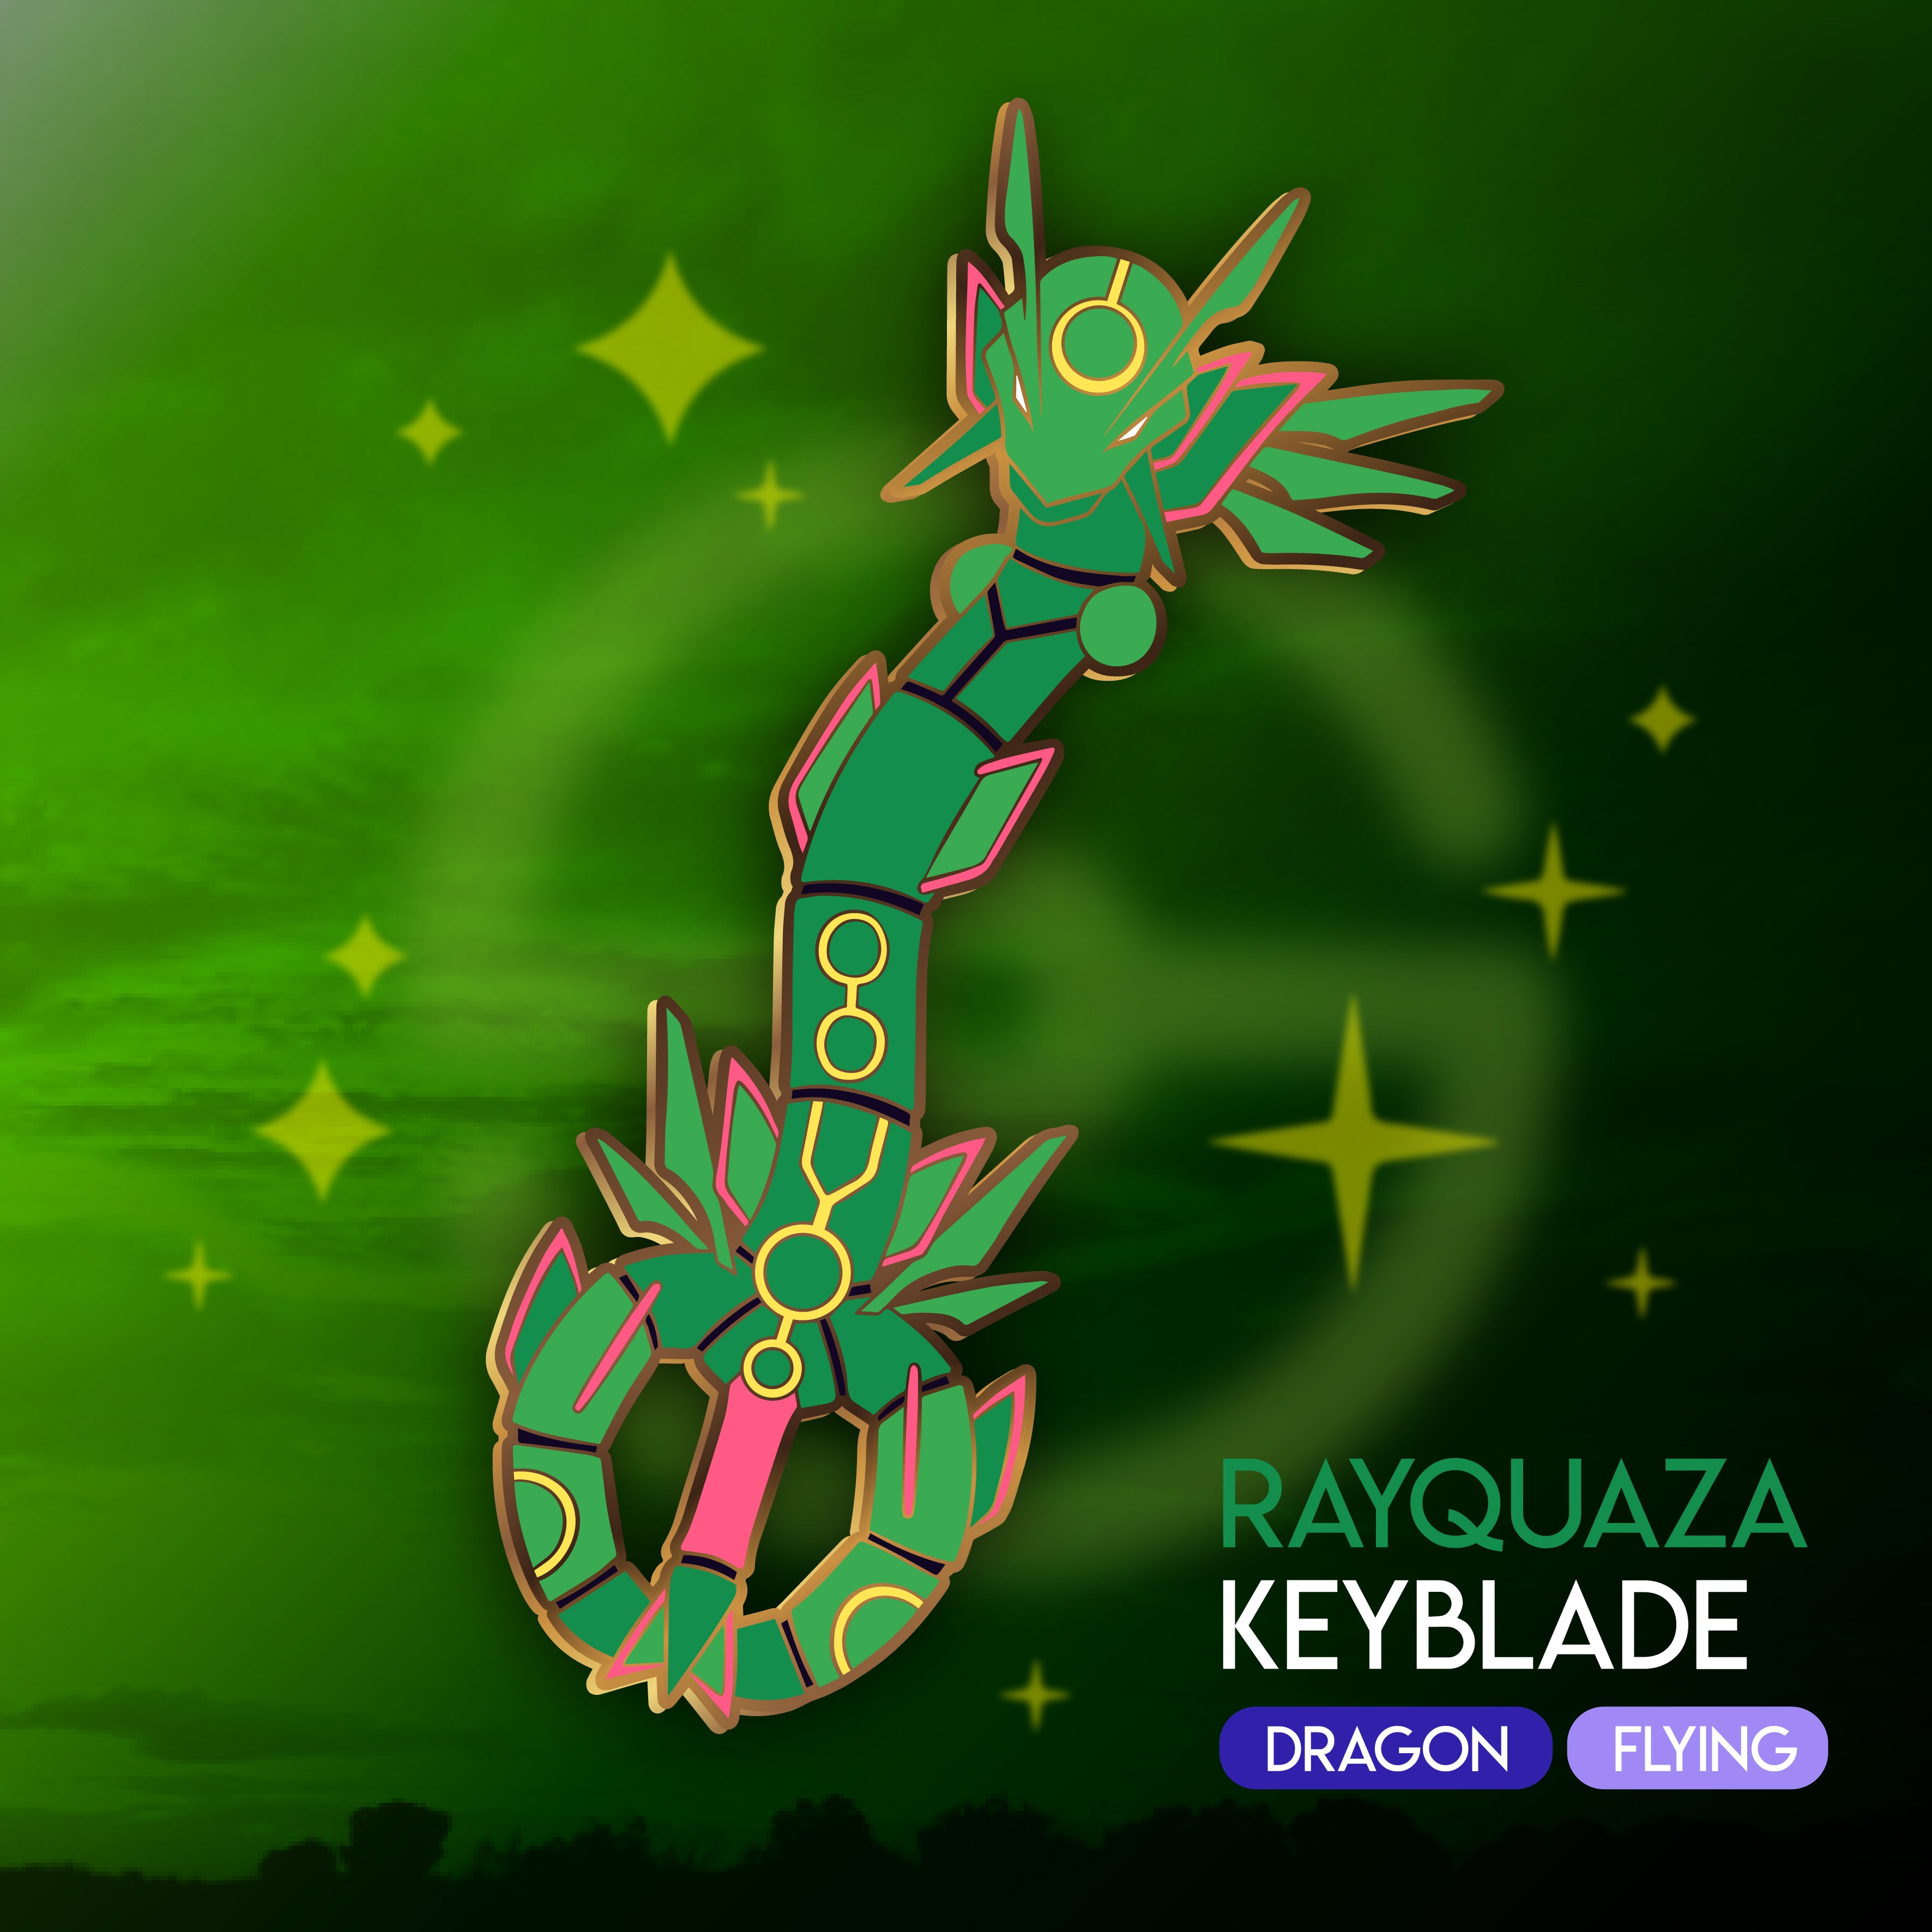 Shinnoyume Mewtwo Keyblade - Pokemon Legendary Keyblade Enamel Pin